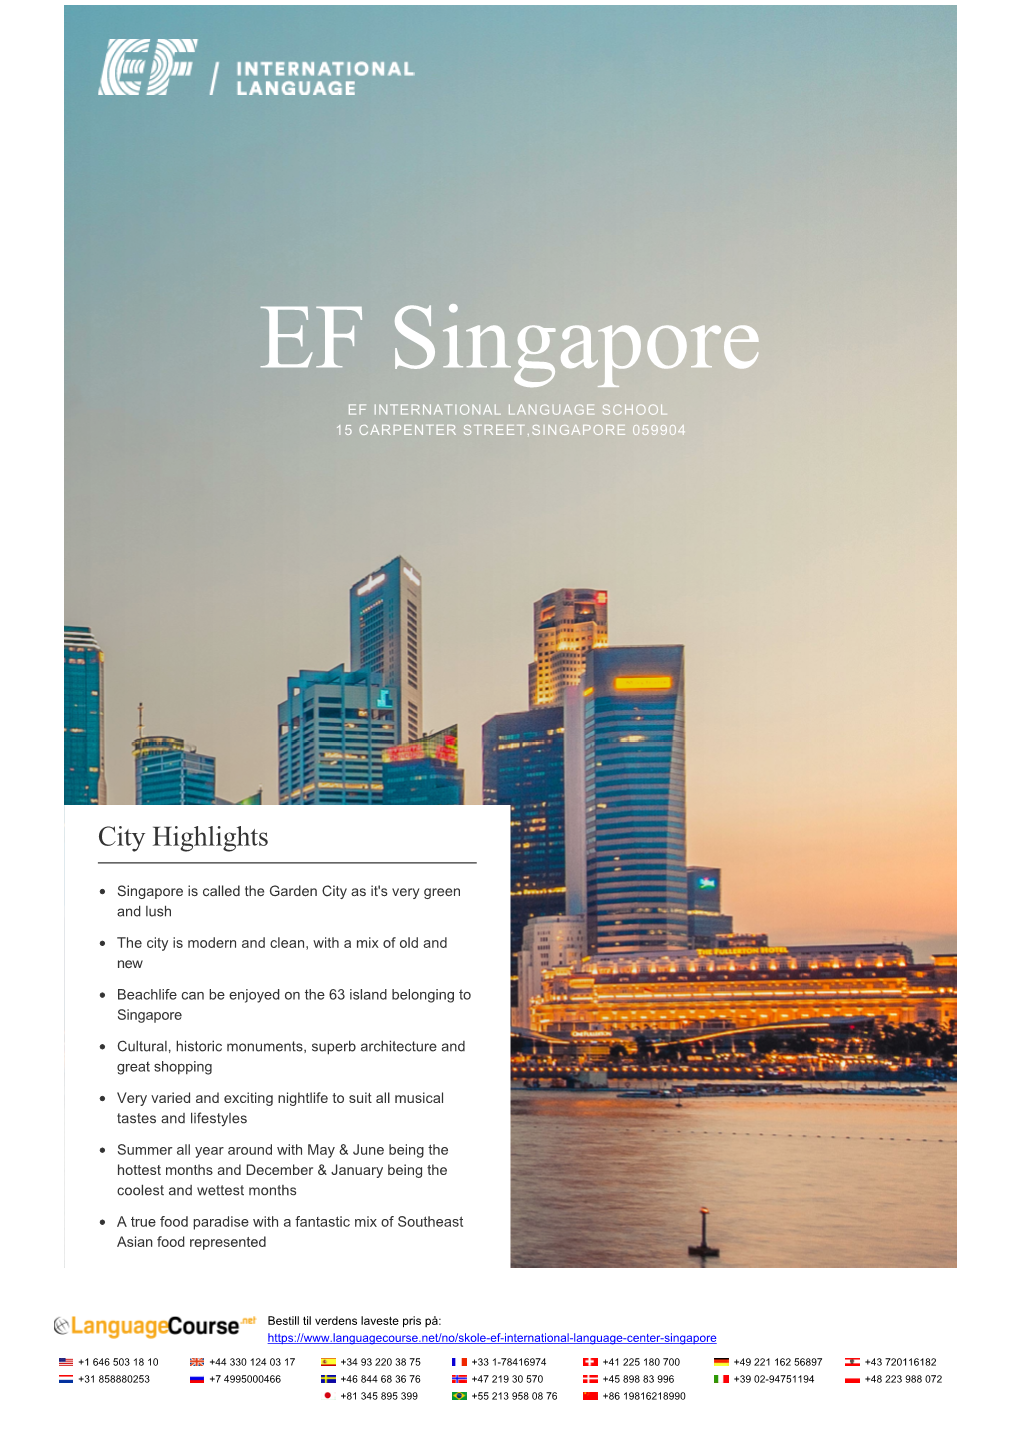 EF International Language Center, Singapore